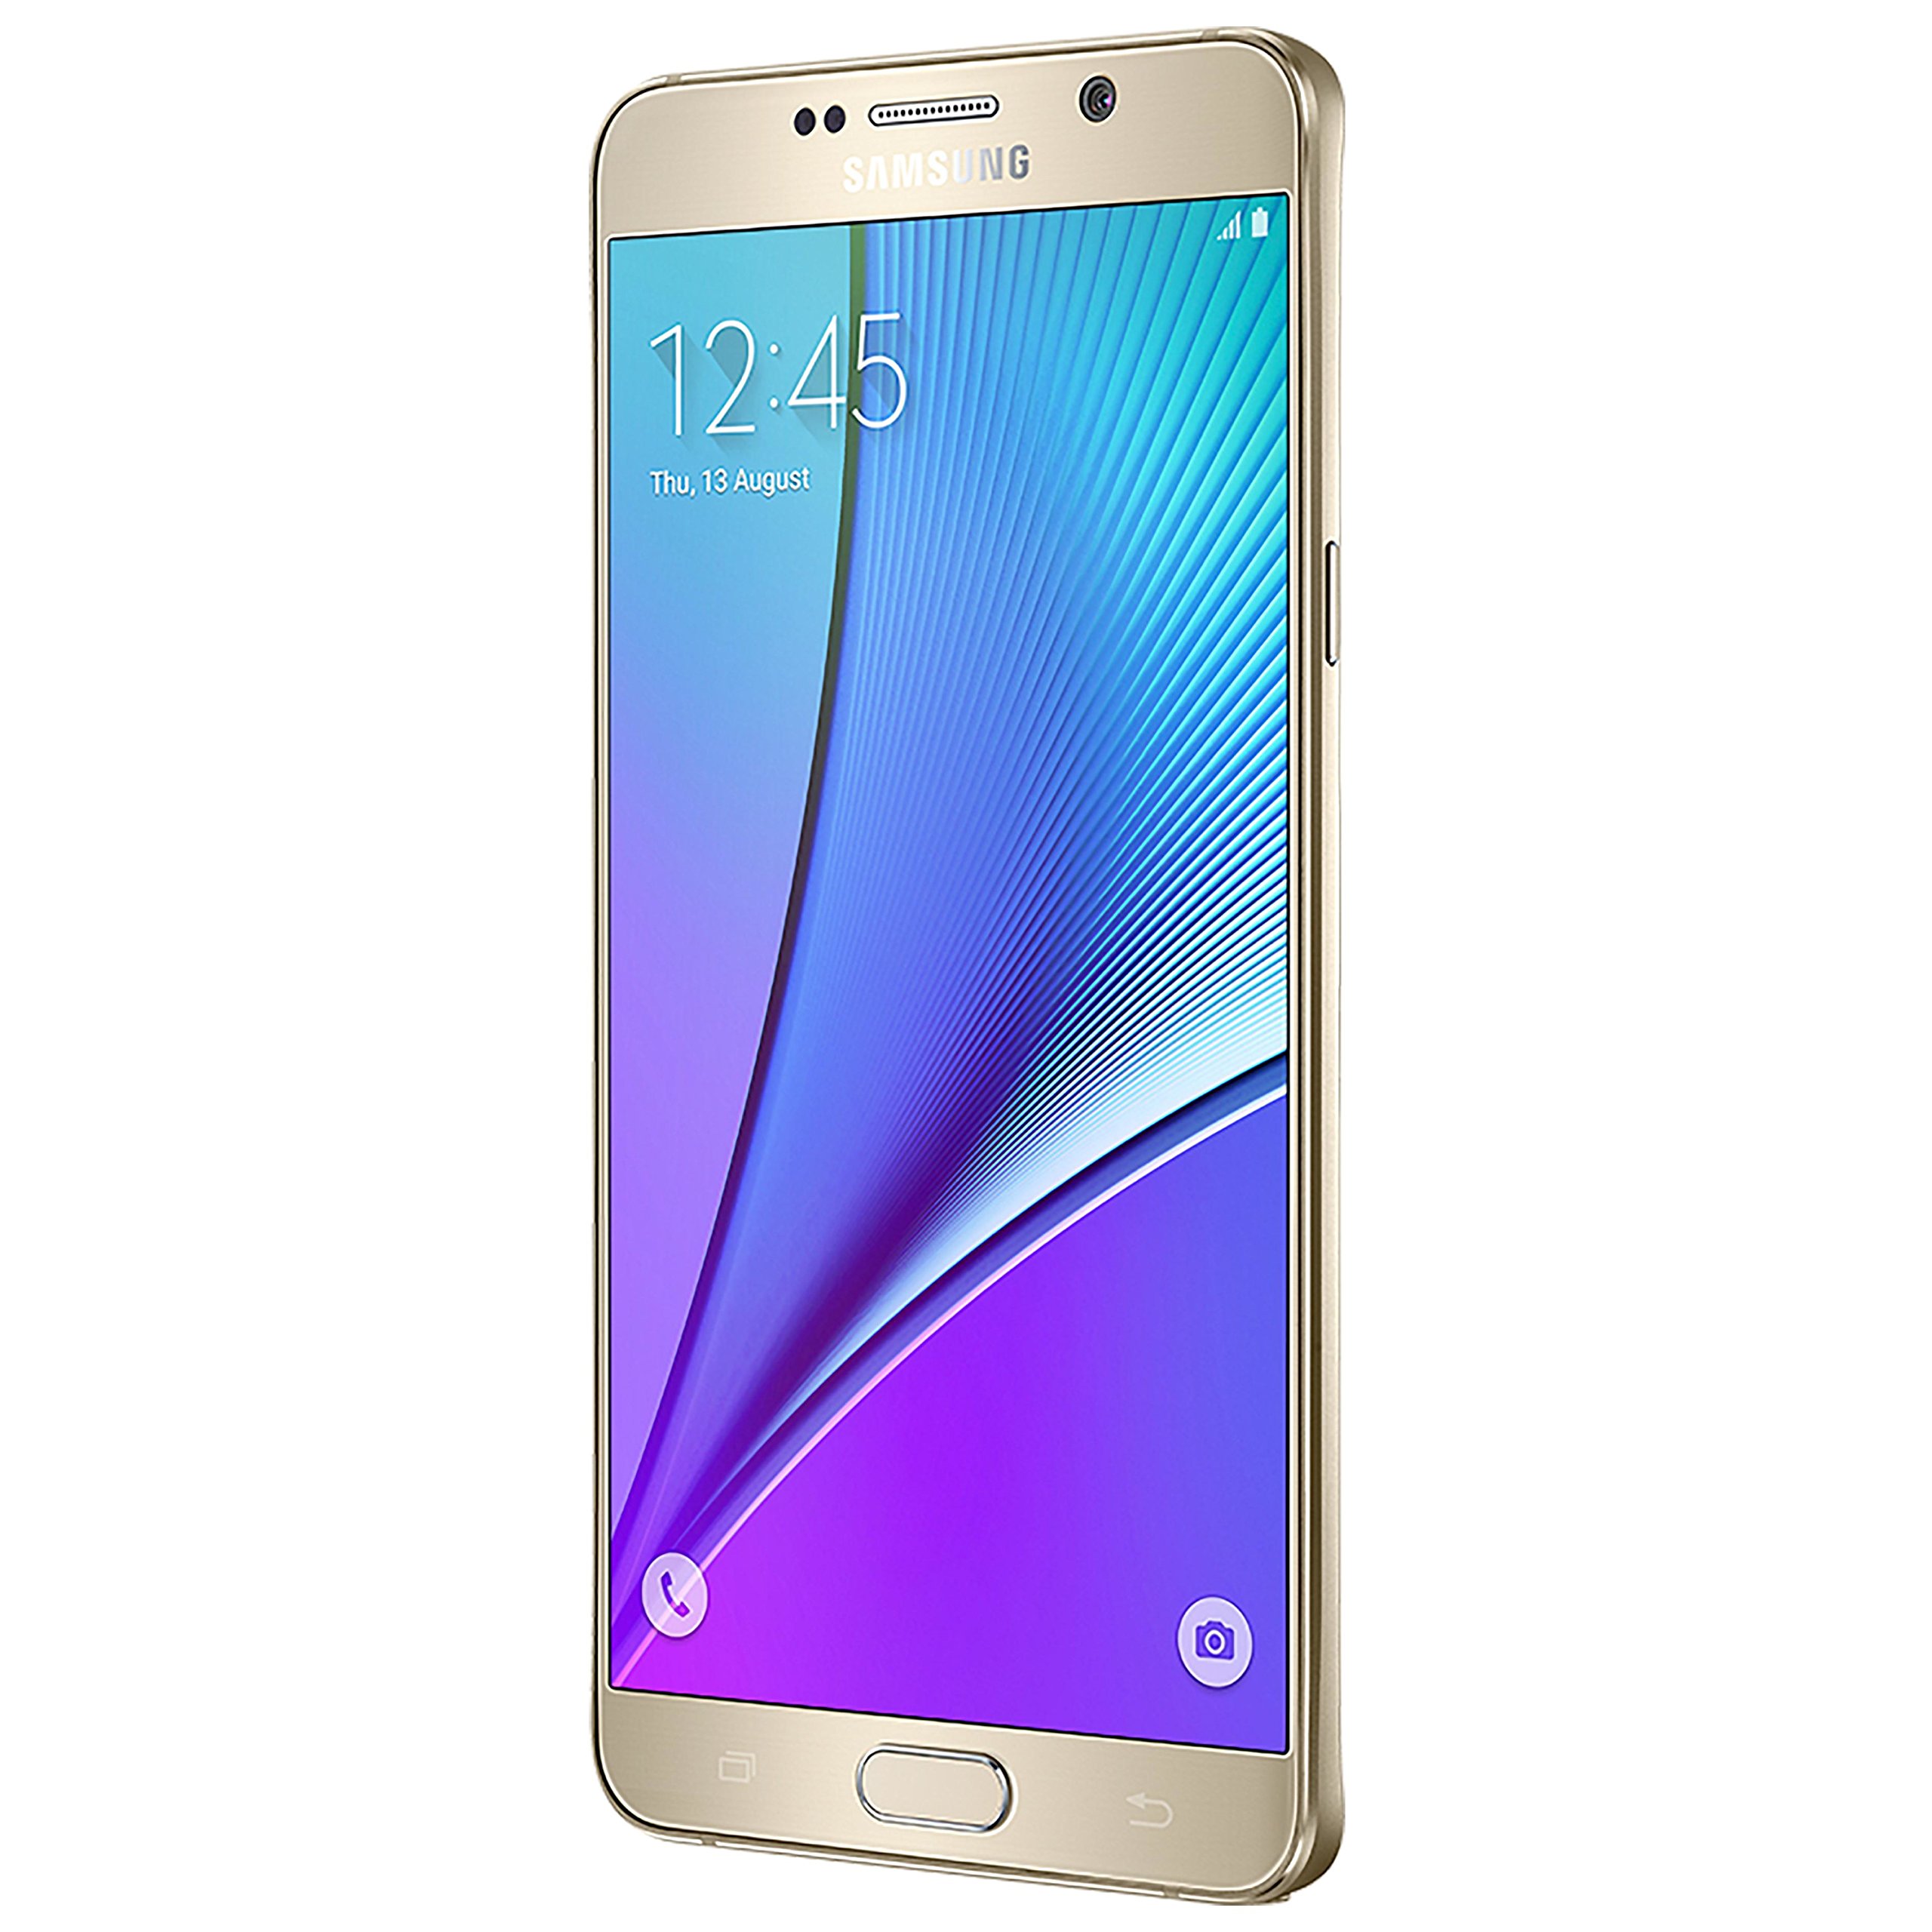 Samsung Galaxy Note 5 N920C 32GB Factory Unlocked GSM - International Version - GOLD no warranty